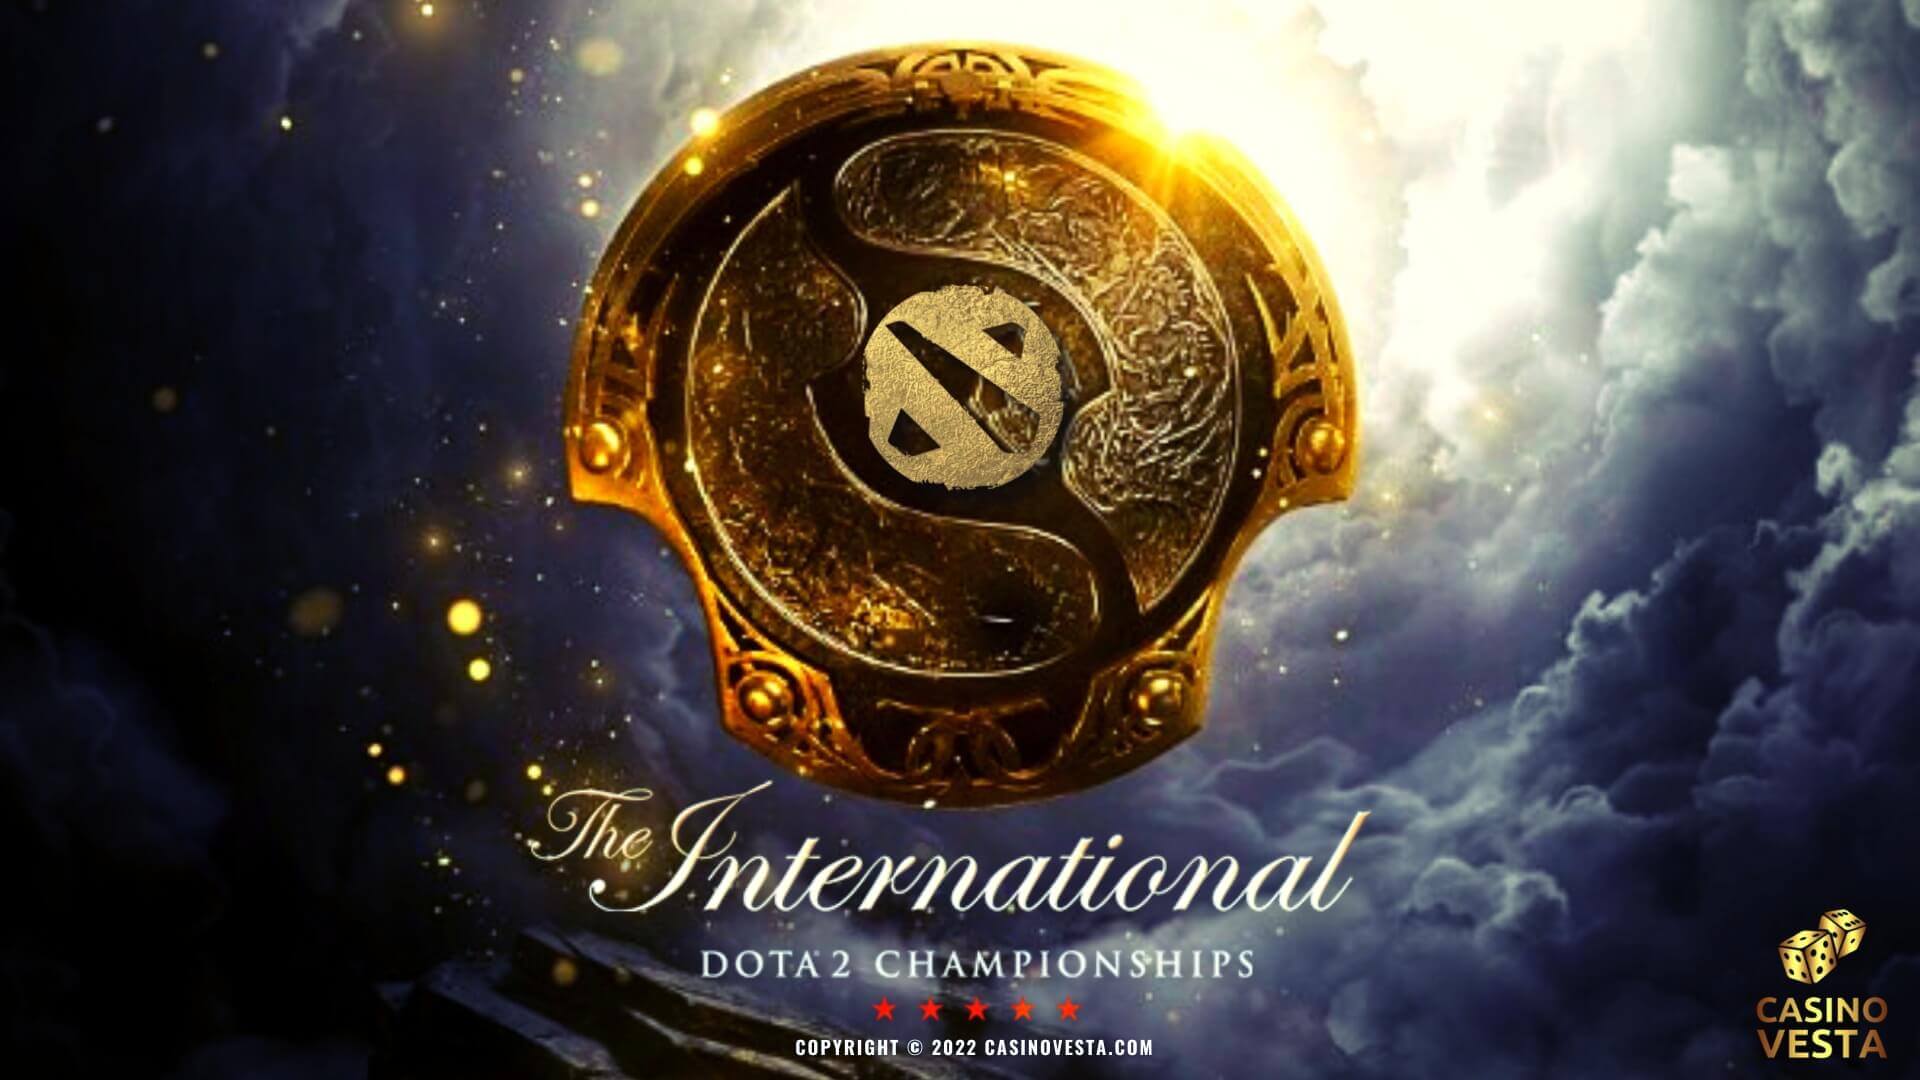 The International Dota 2 Championships 2022